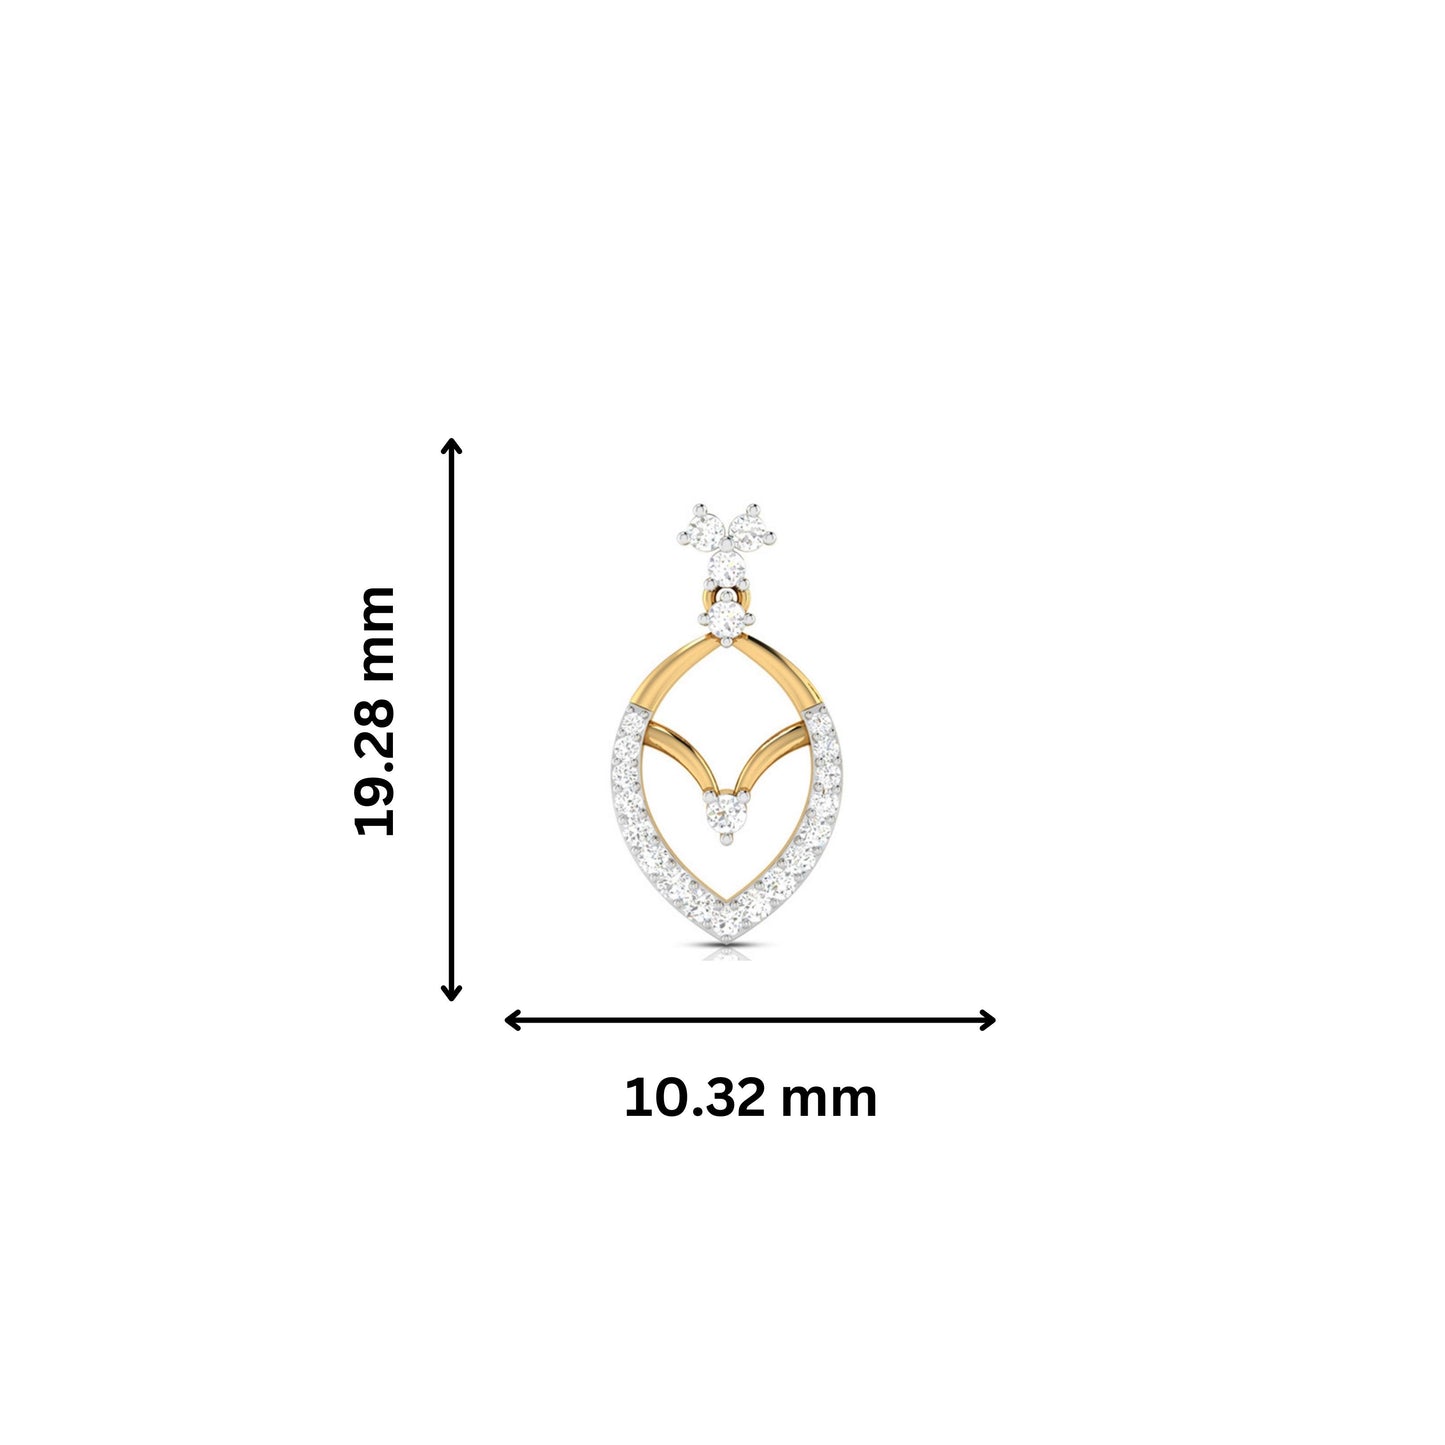 Small earrings design Empress Lab Grown Diamond Earrings Fiona Diamonds